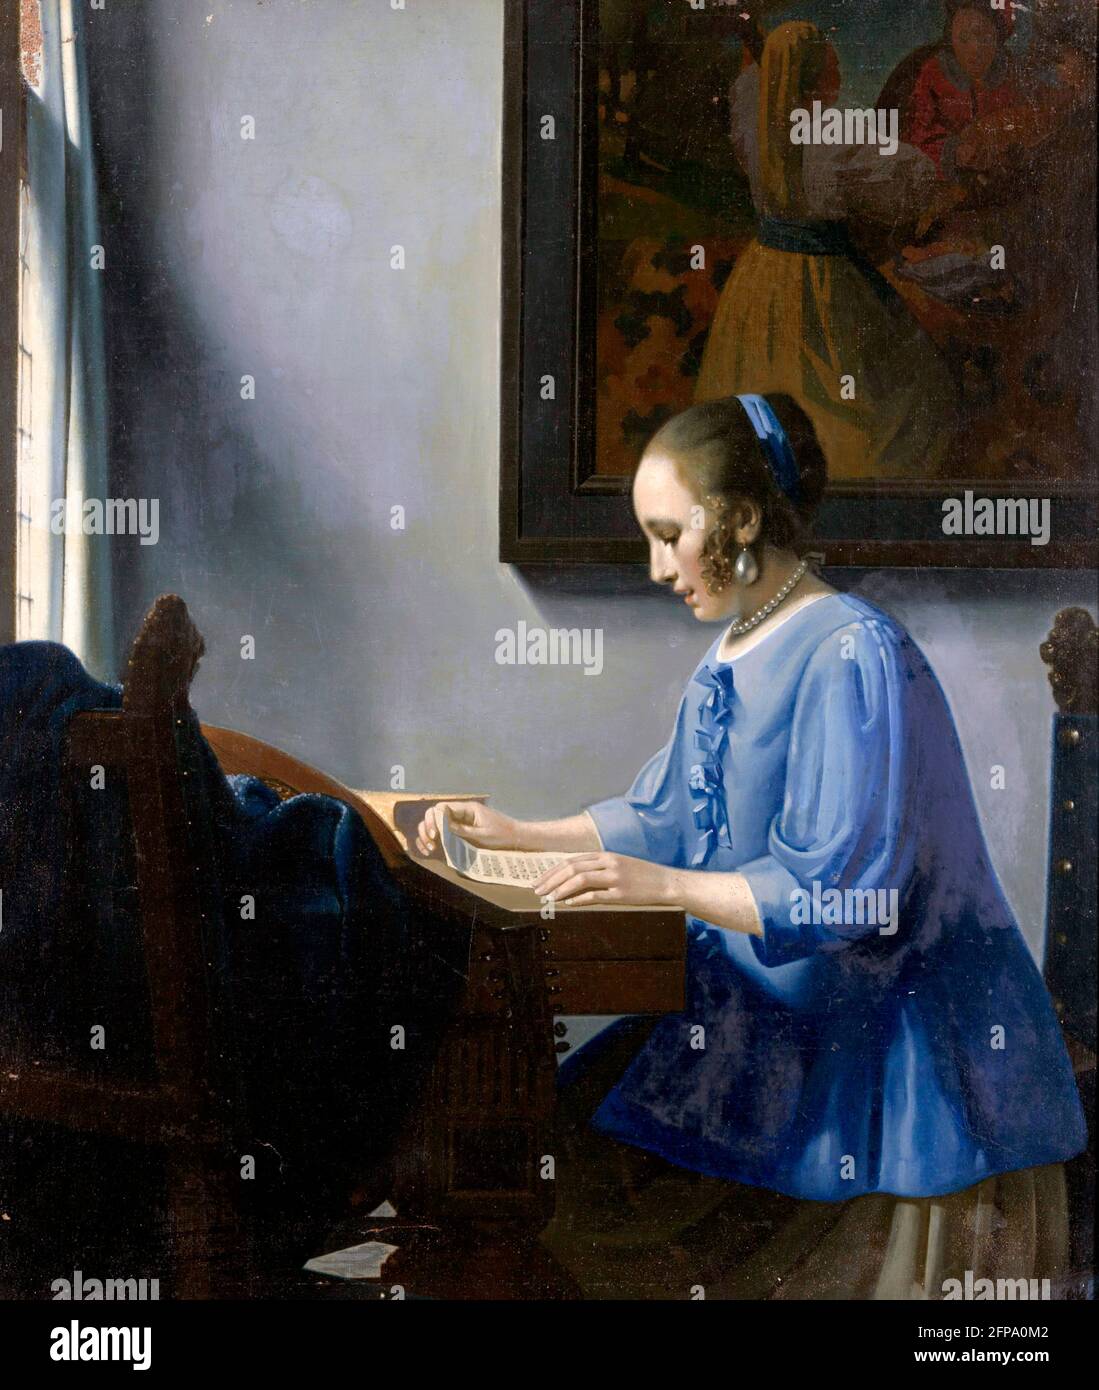 Han van Meegeren. Muzieklezende Vrouw (Donna di lettura Musica), un dipinto nello stile di Vermeer del famoso falsario d'arte olandese Henricus Antonius 'Han' van Meegeren (1889-1947), olio su tela, 1935-1940 Foto Stock